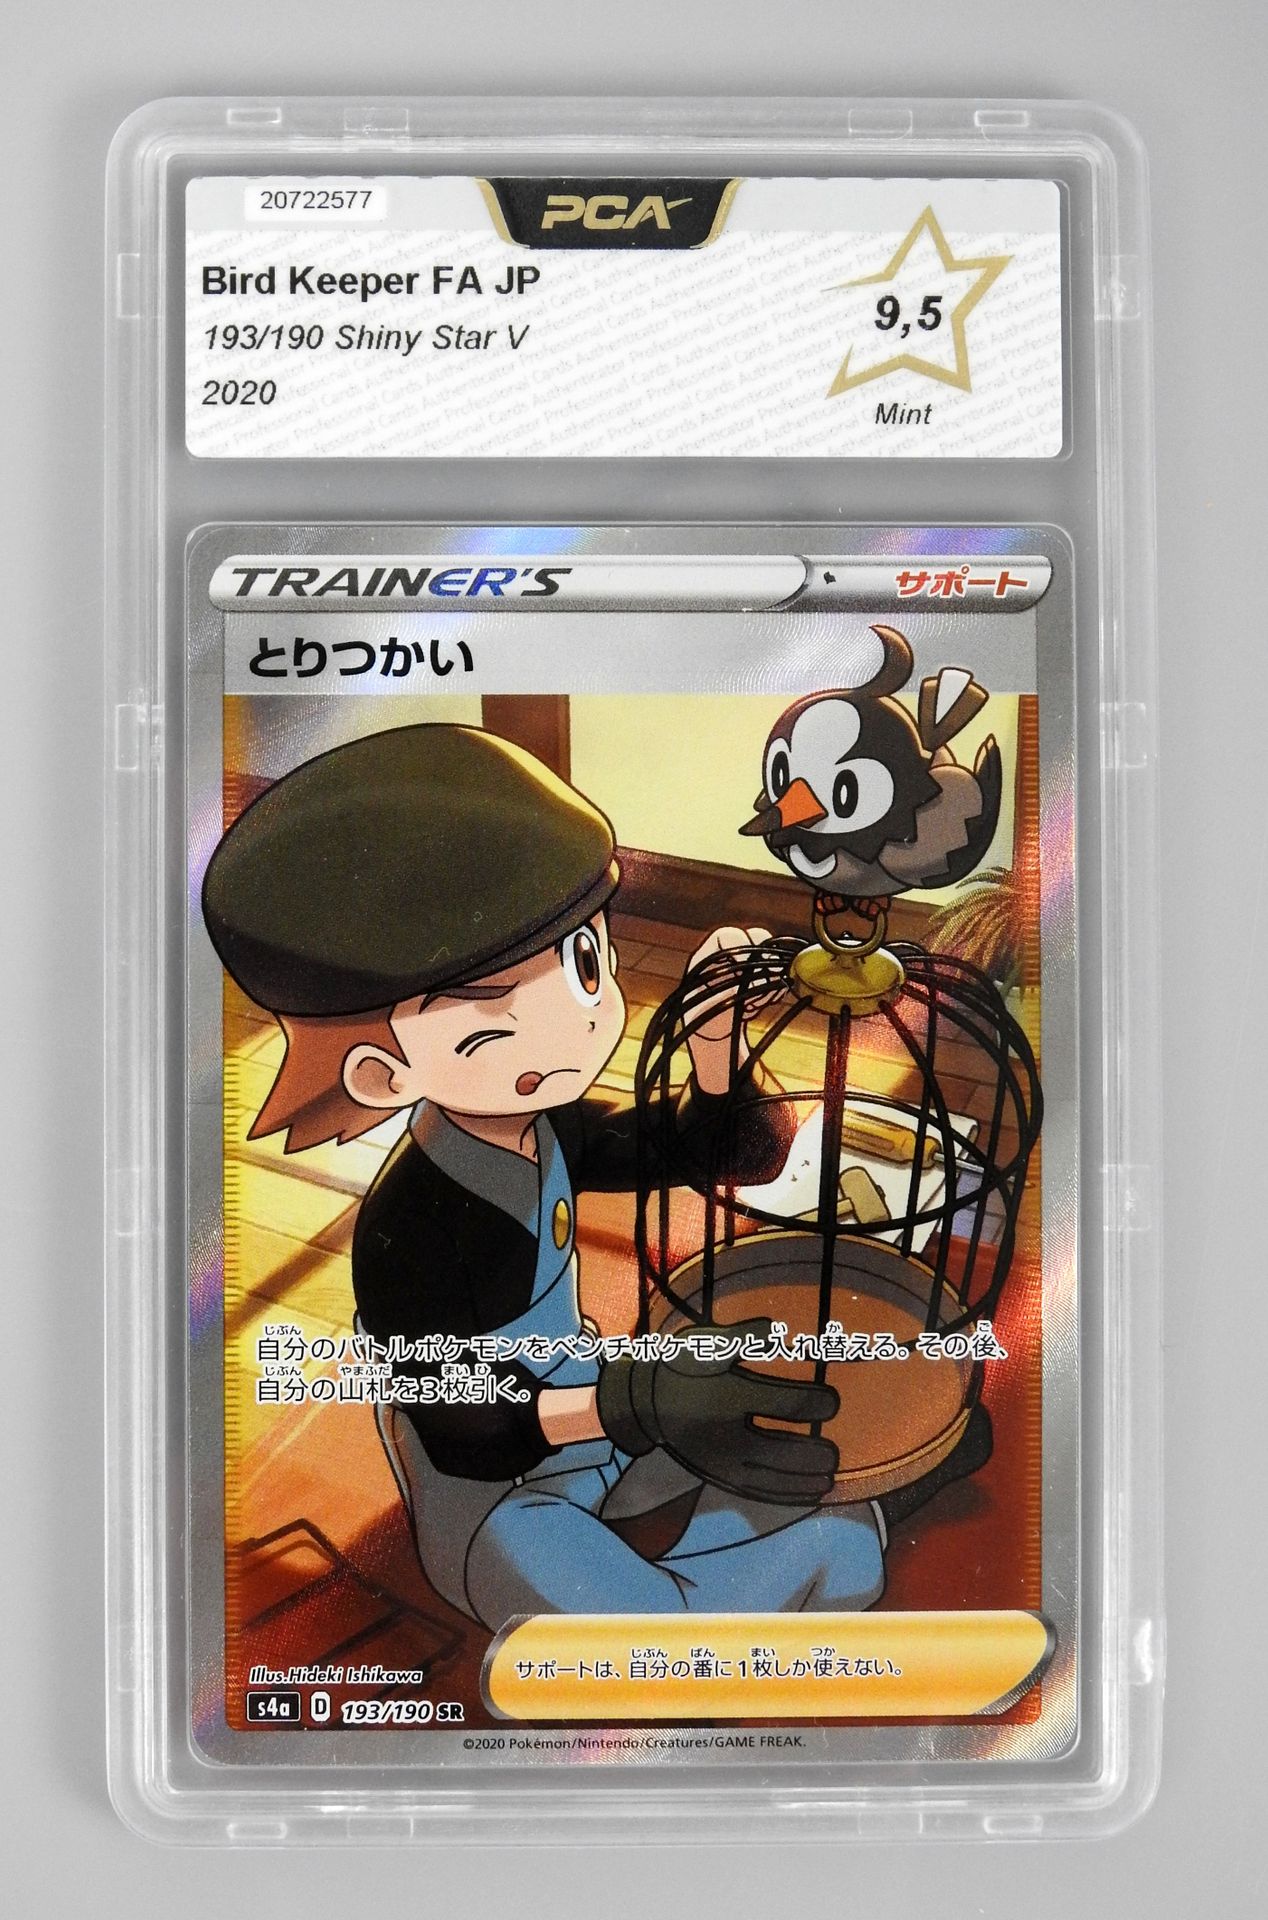 Null BIRD KEEPER Full Art

Shiny Star V 193/190 JAP

Scheda Pokémon voto PCA 9.5&hellip;